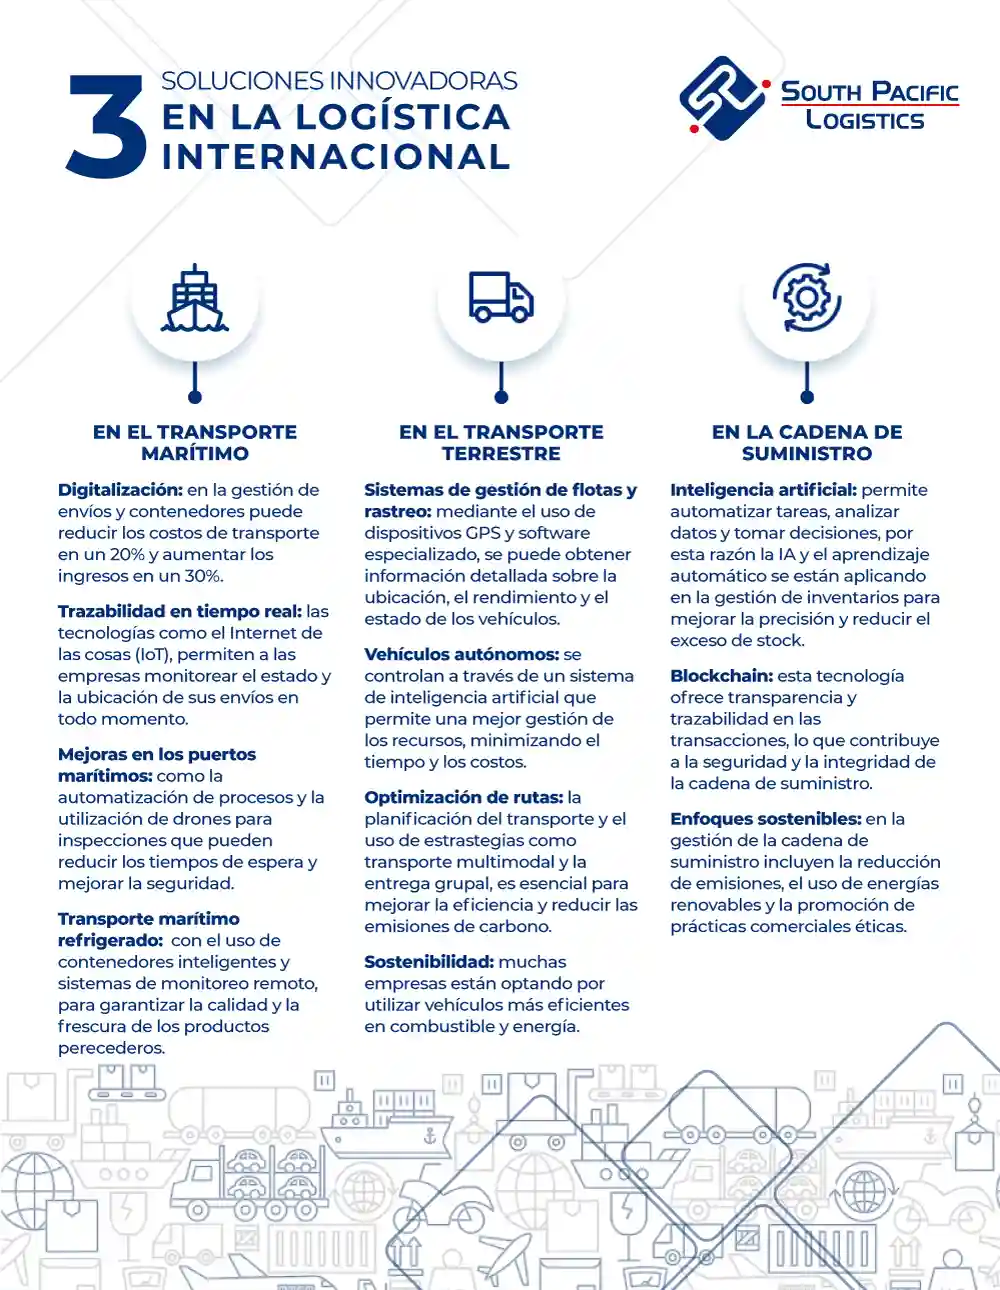 Infografia sobre las soluciones en la logistica internacional